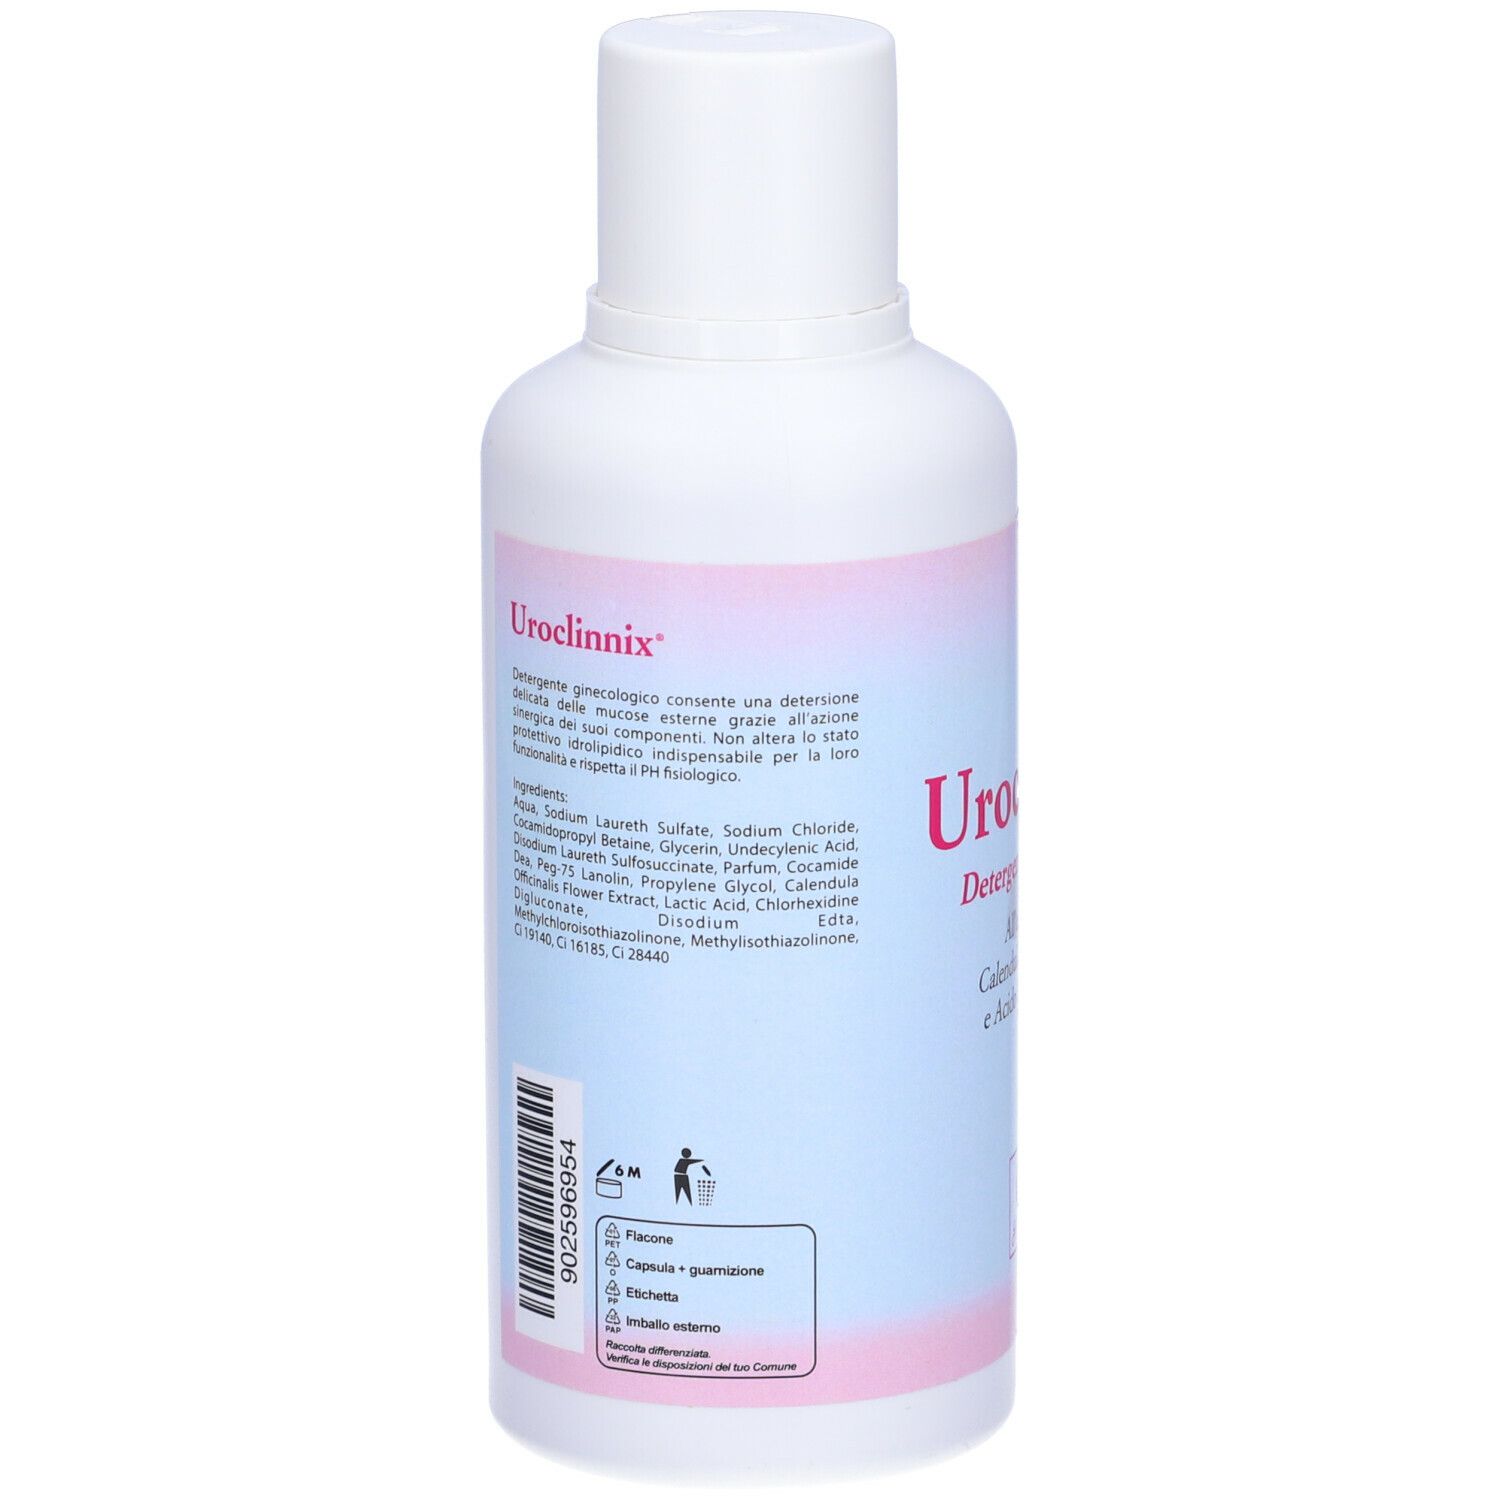 Uroclinnix Detergente Urologico